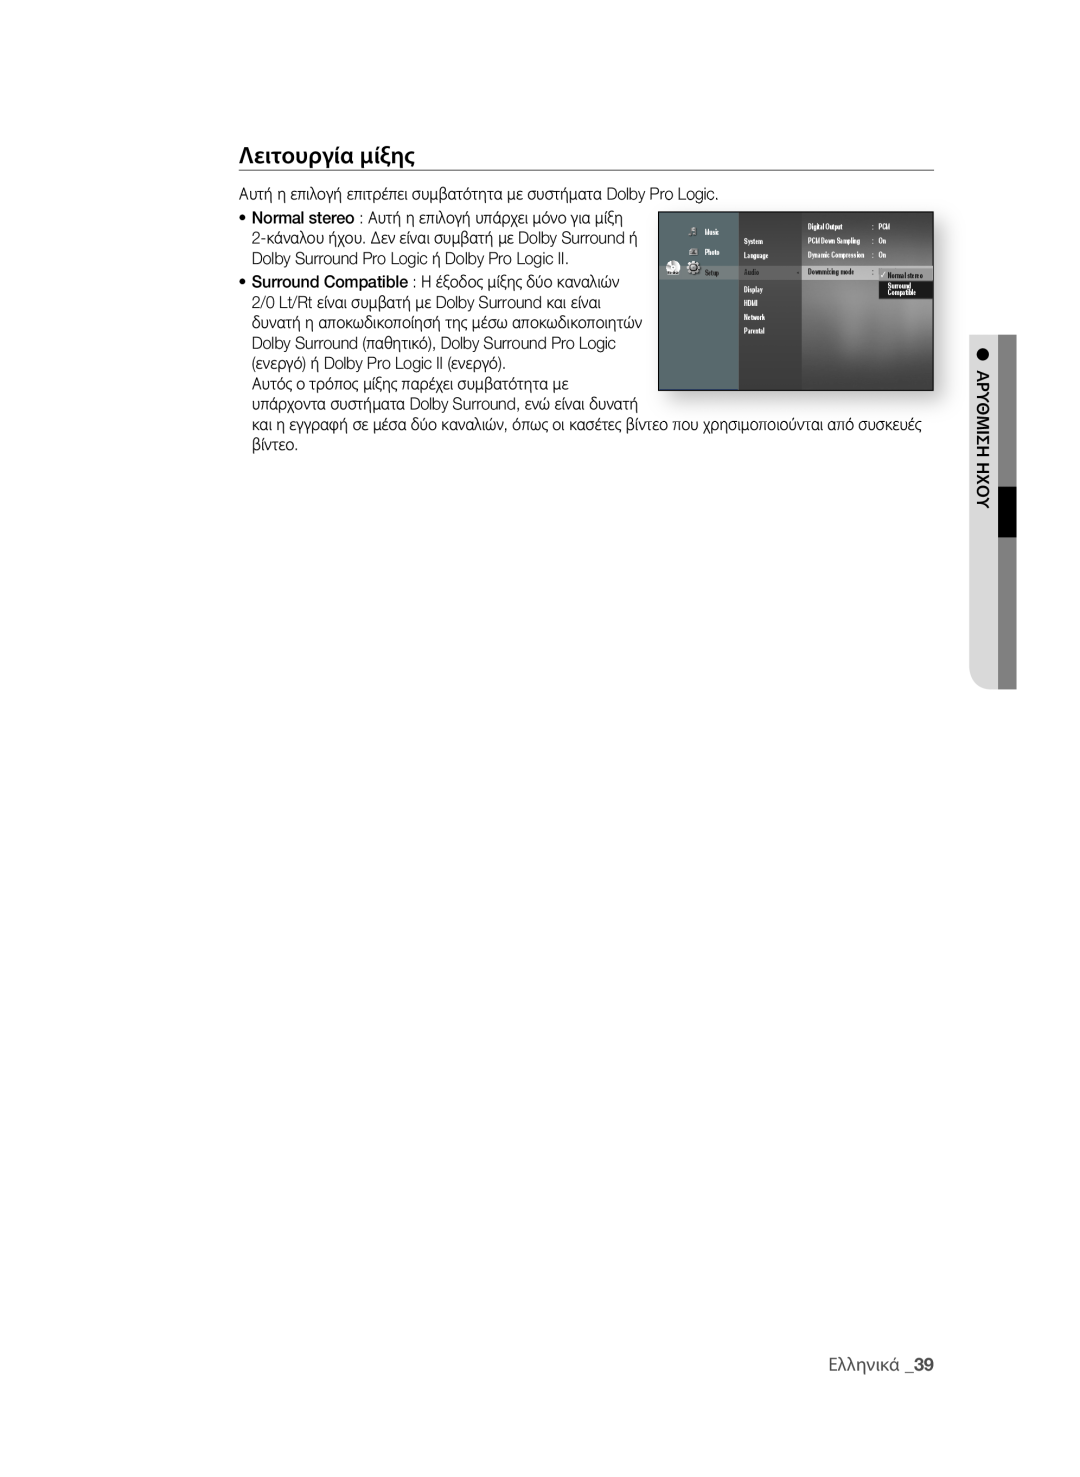 Samsung BD-P1580/EDC Λειτουργία μίξης, Ελληνικά 3, Αυτή η επιλογή επιτρέπει συμβατότητα με συστήματα Dolby Pro Logic 